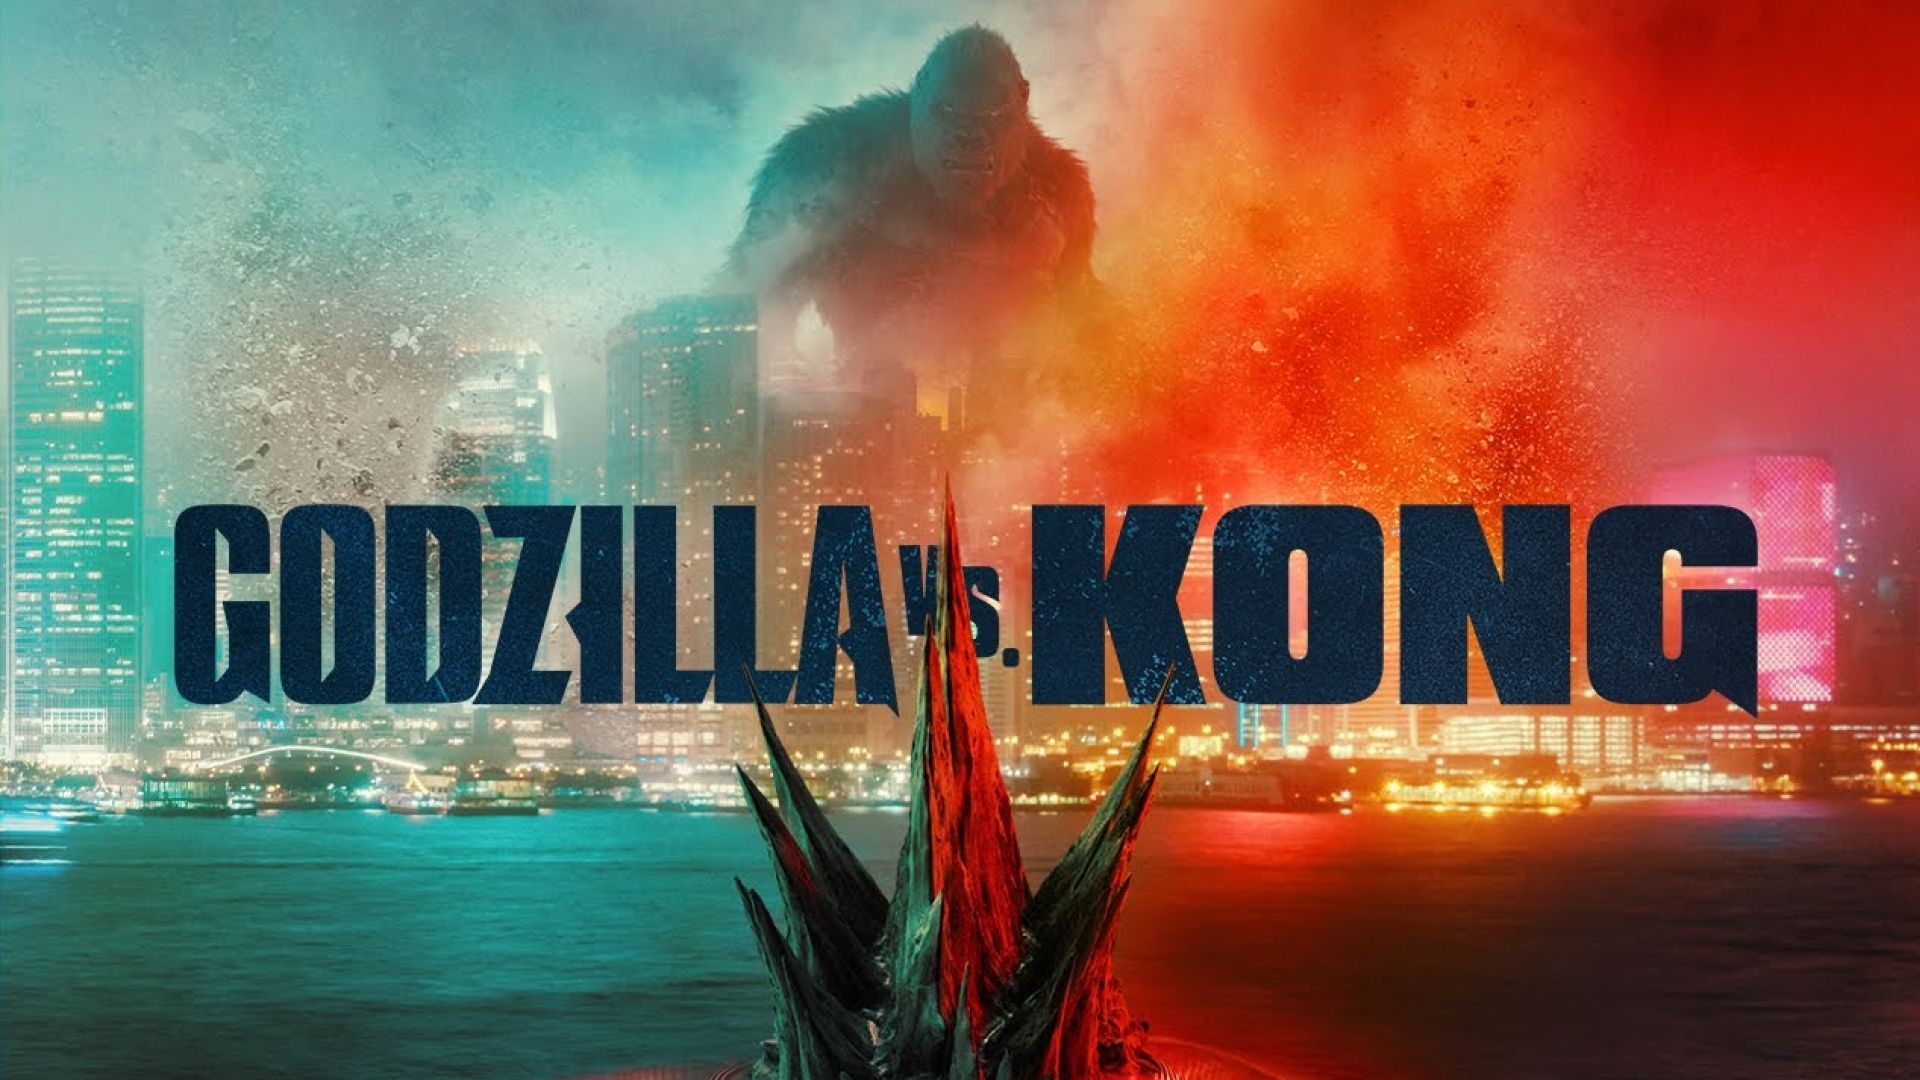 Godzilla vs. Kong Official Trailer